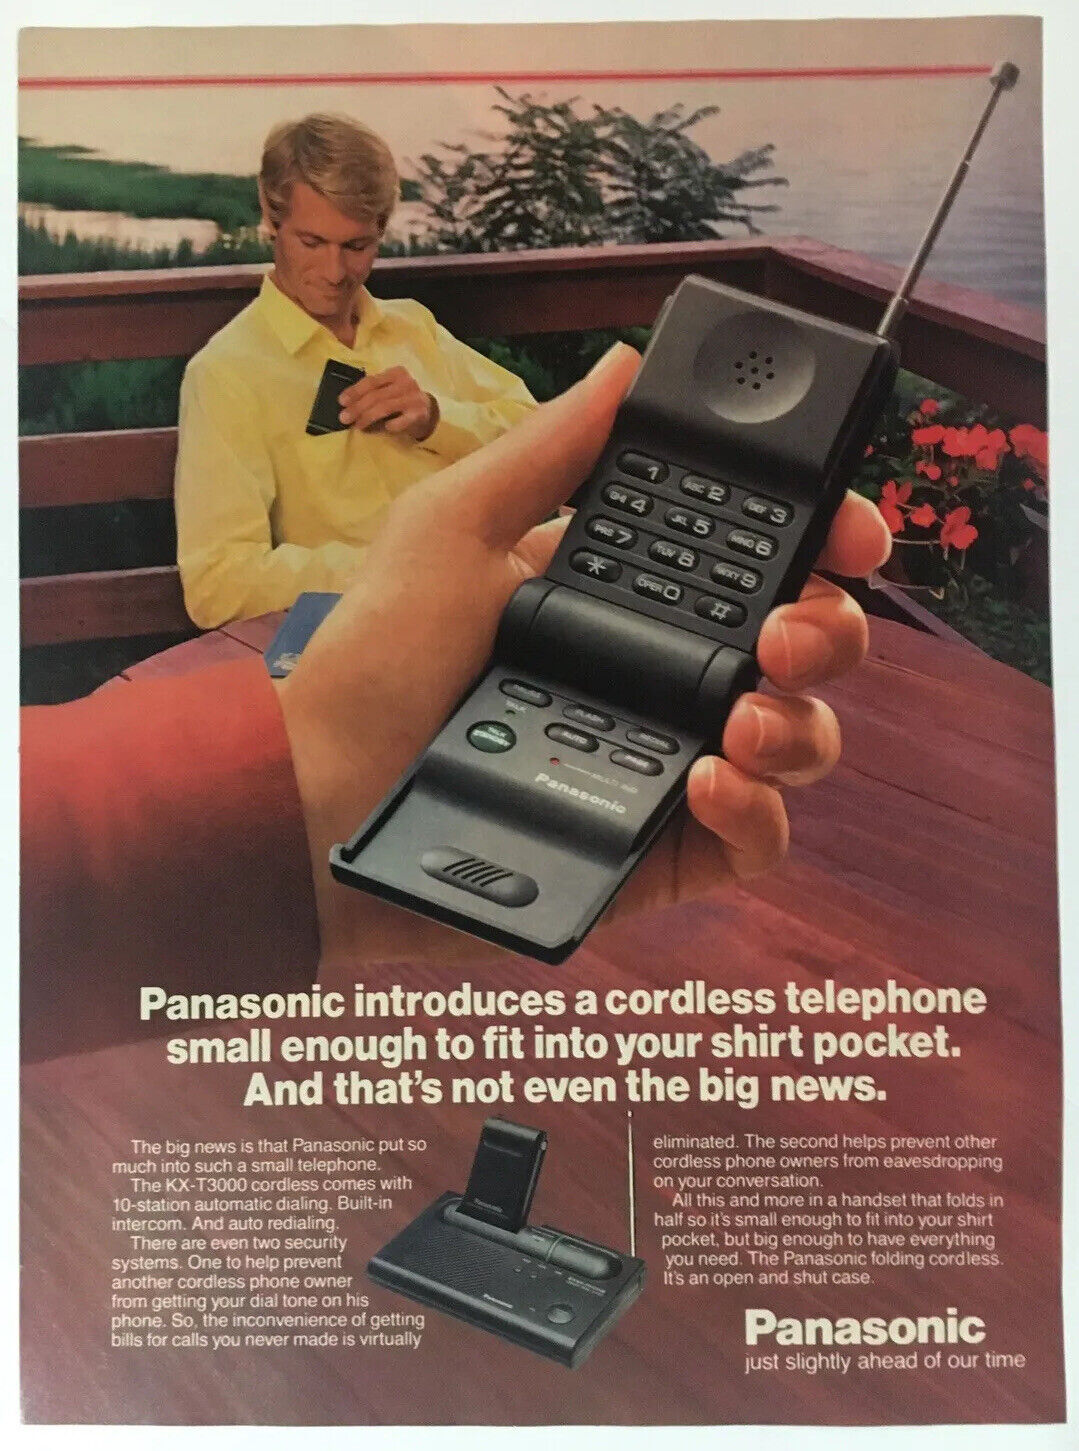 Panasonic Cordless Phone 1987 Vintage Print Ad 8x11 Inches